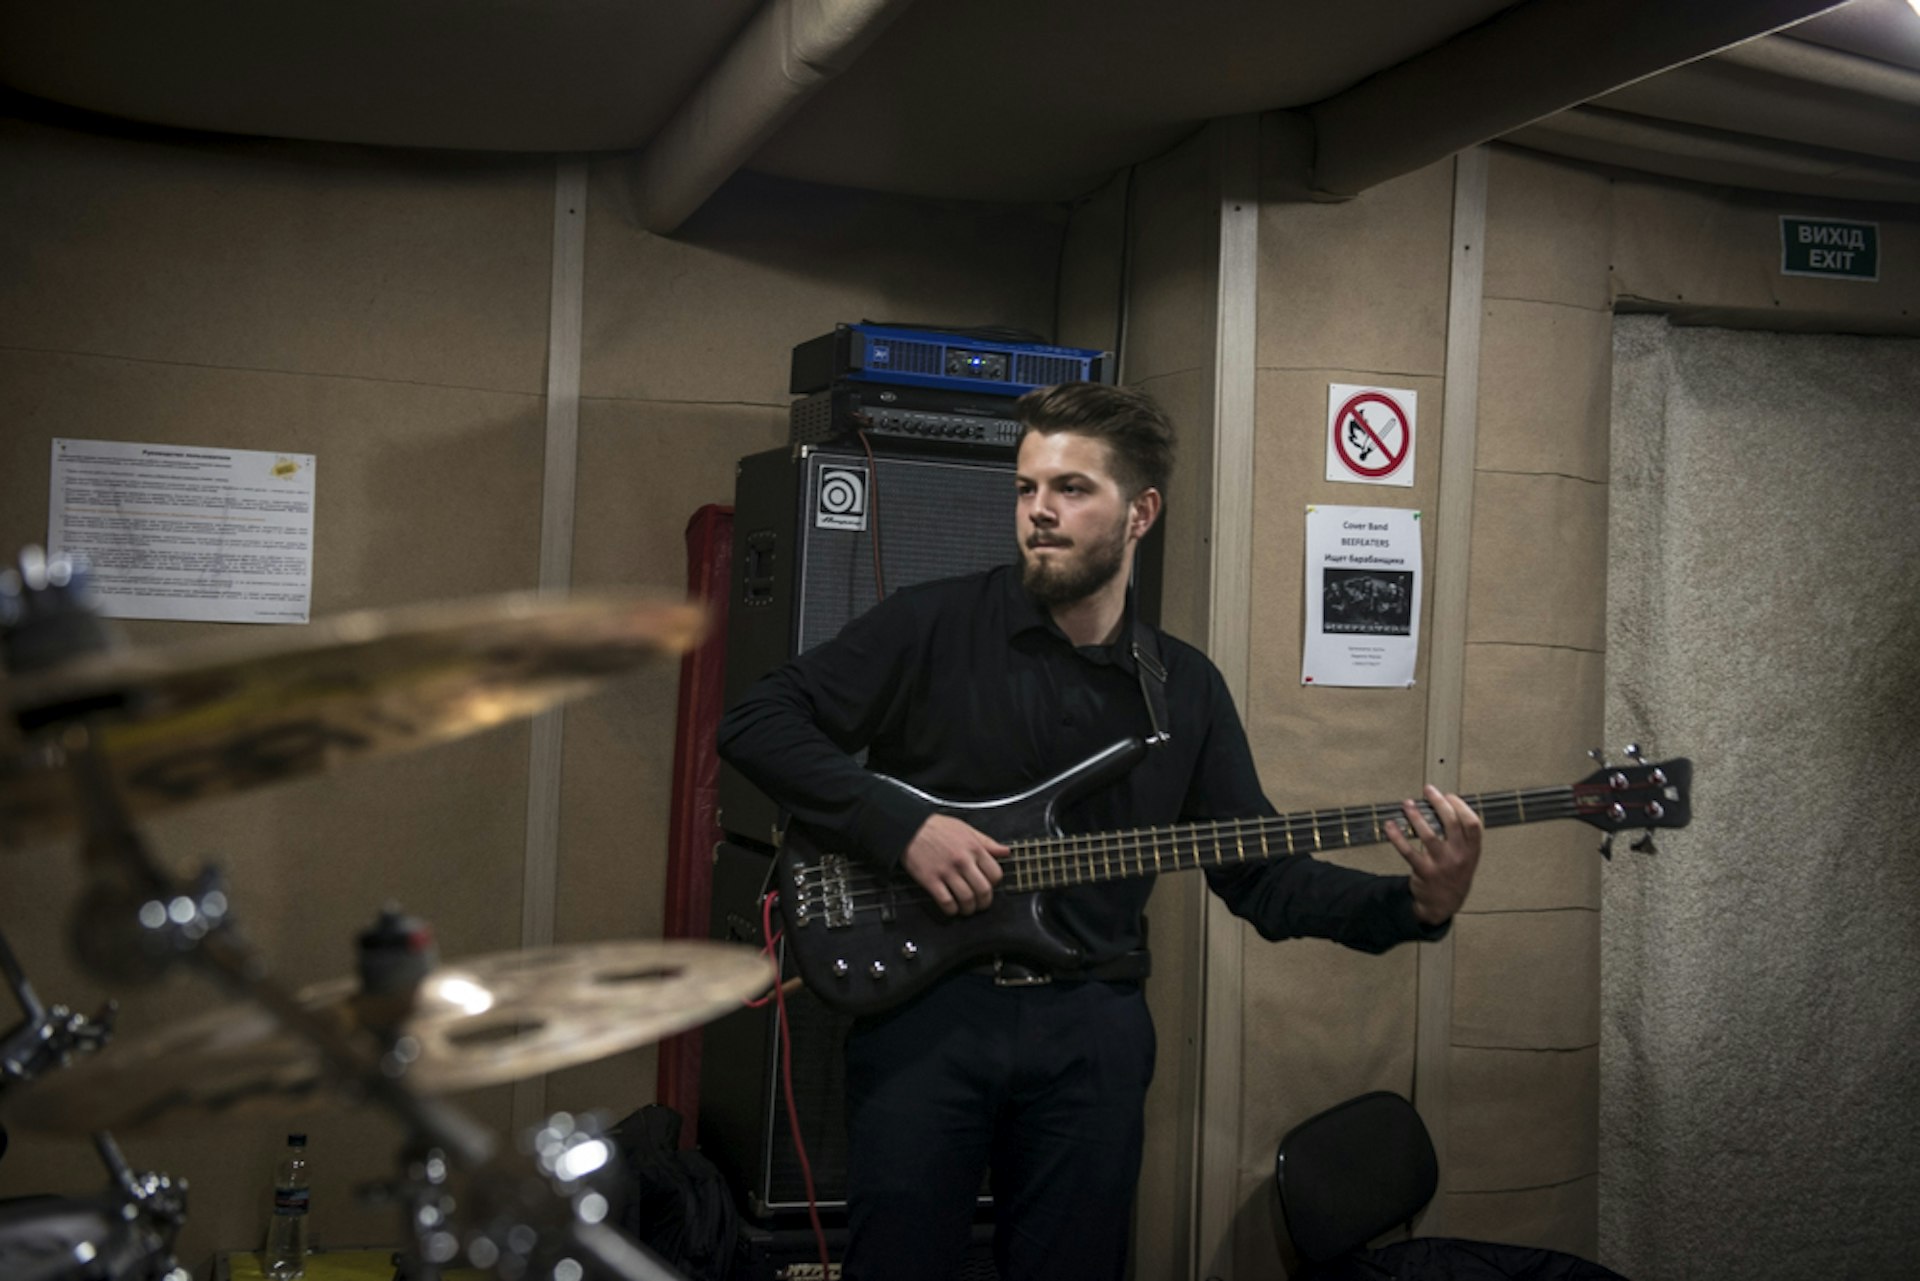 Yevhen Revko, 22 Bassist in Urban FM (center) practices with his band.